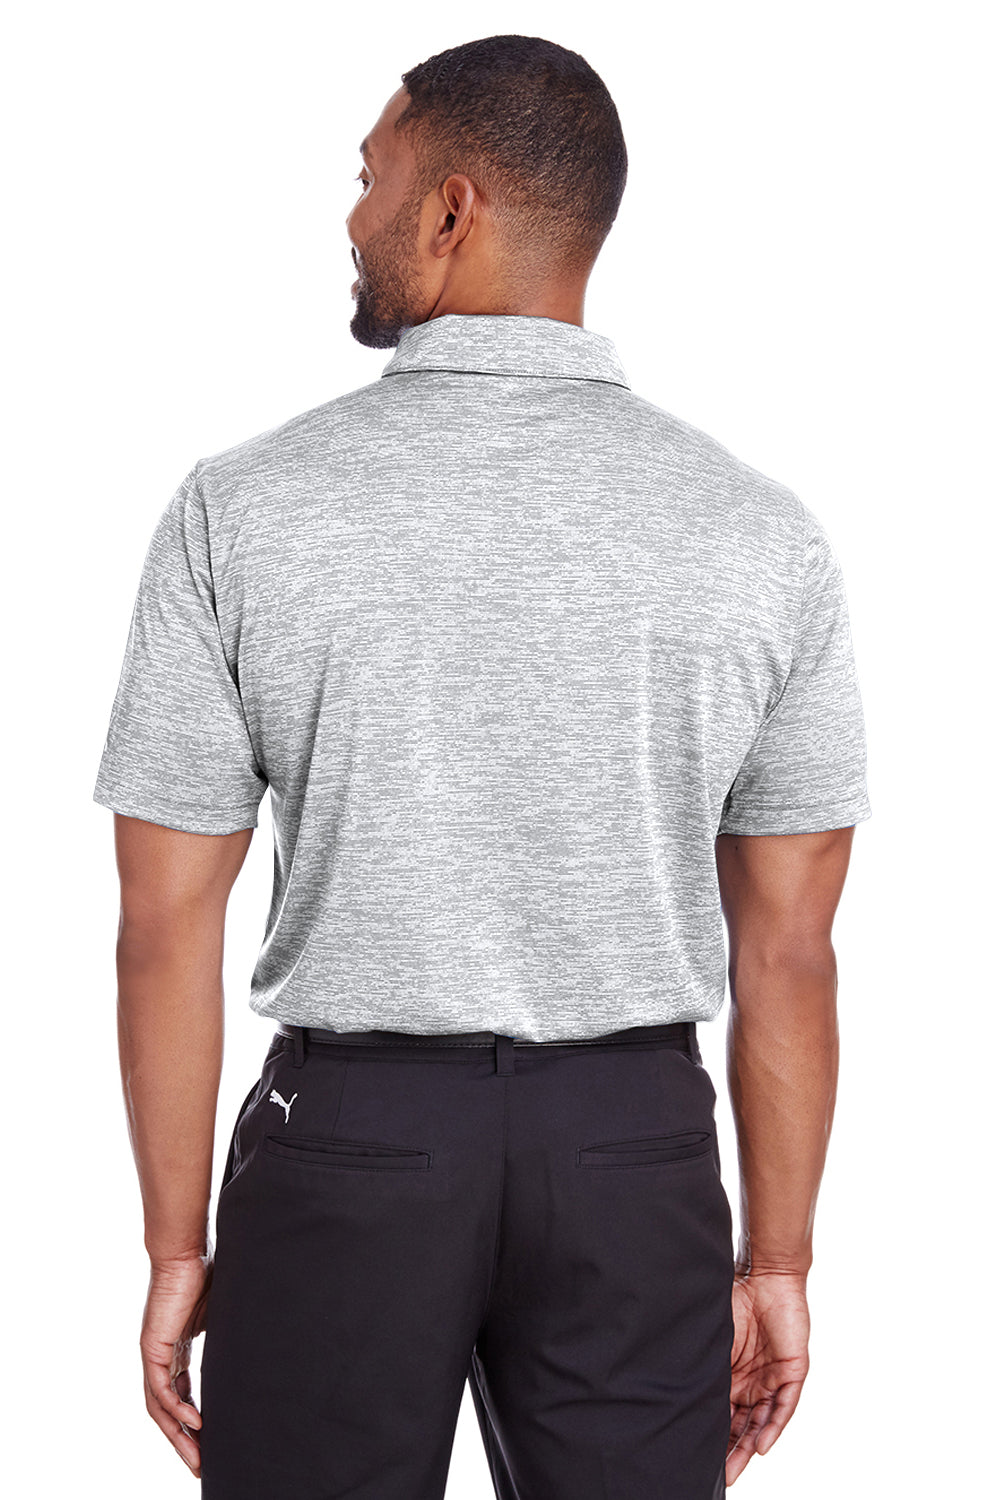 Puma 596801 Mens Icon Performance Moisture Wicking Short Sleeve Polo Shirt White Back